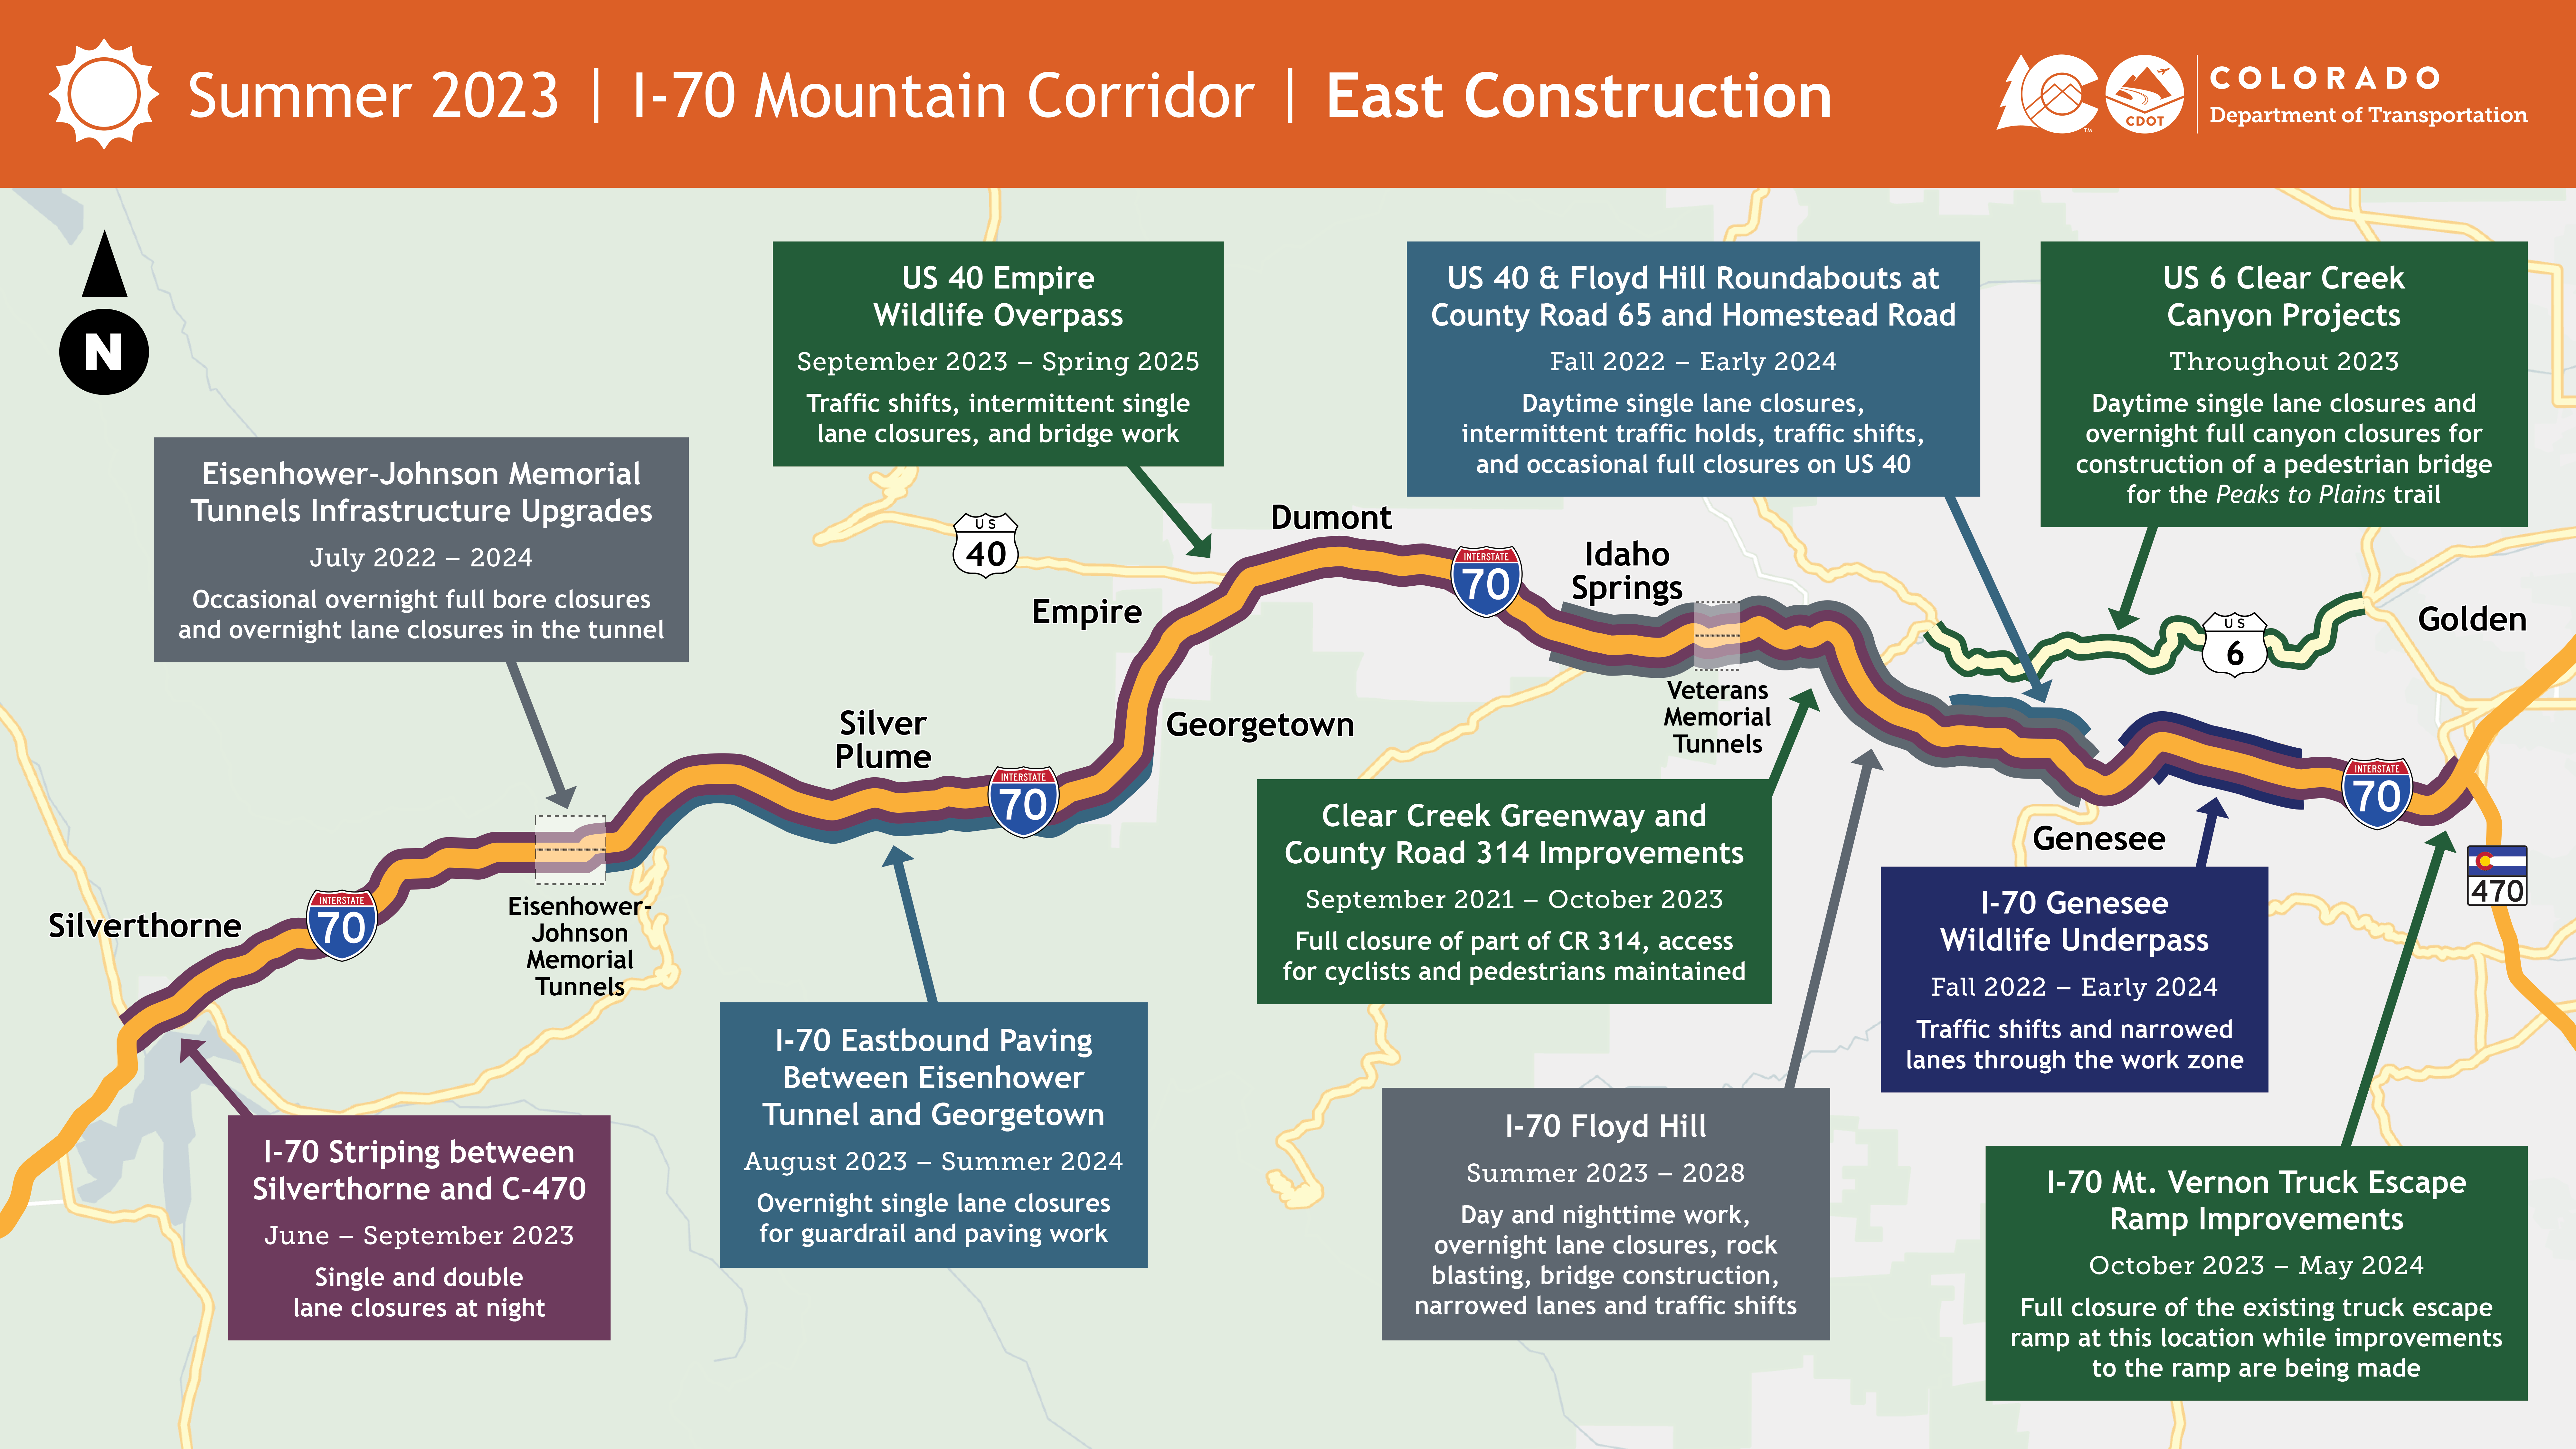 I-70-Mtn-Corridor-Construction-Map-Summer-2023_EAST.png detail image